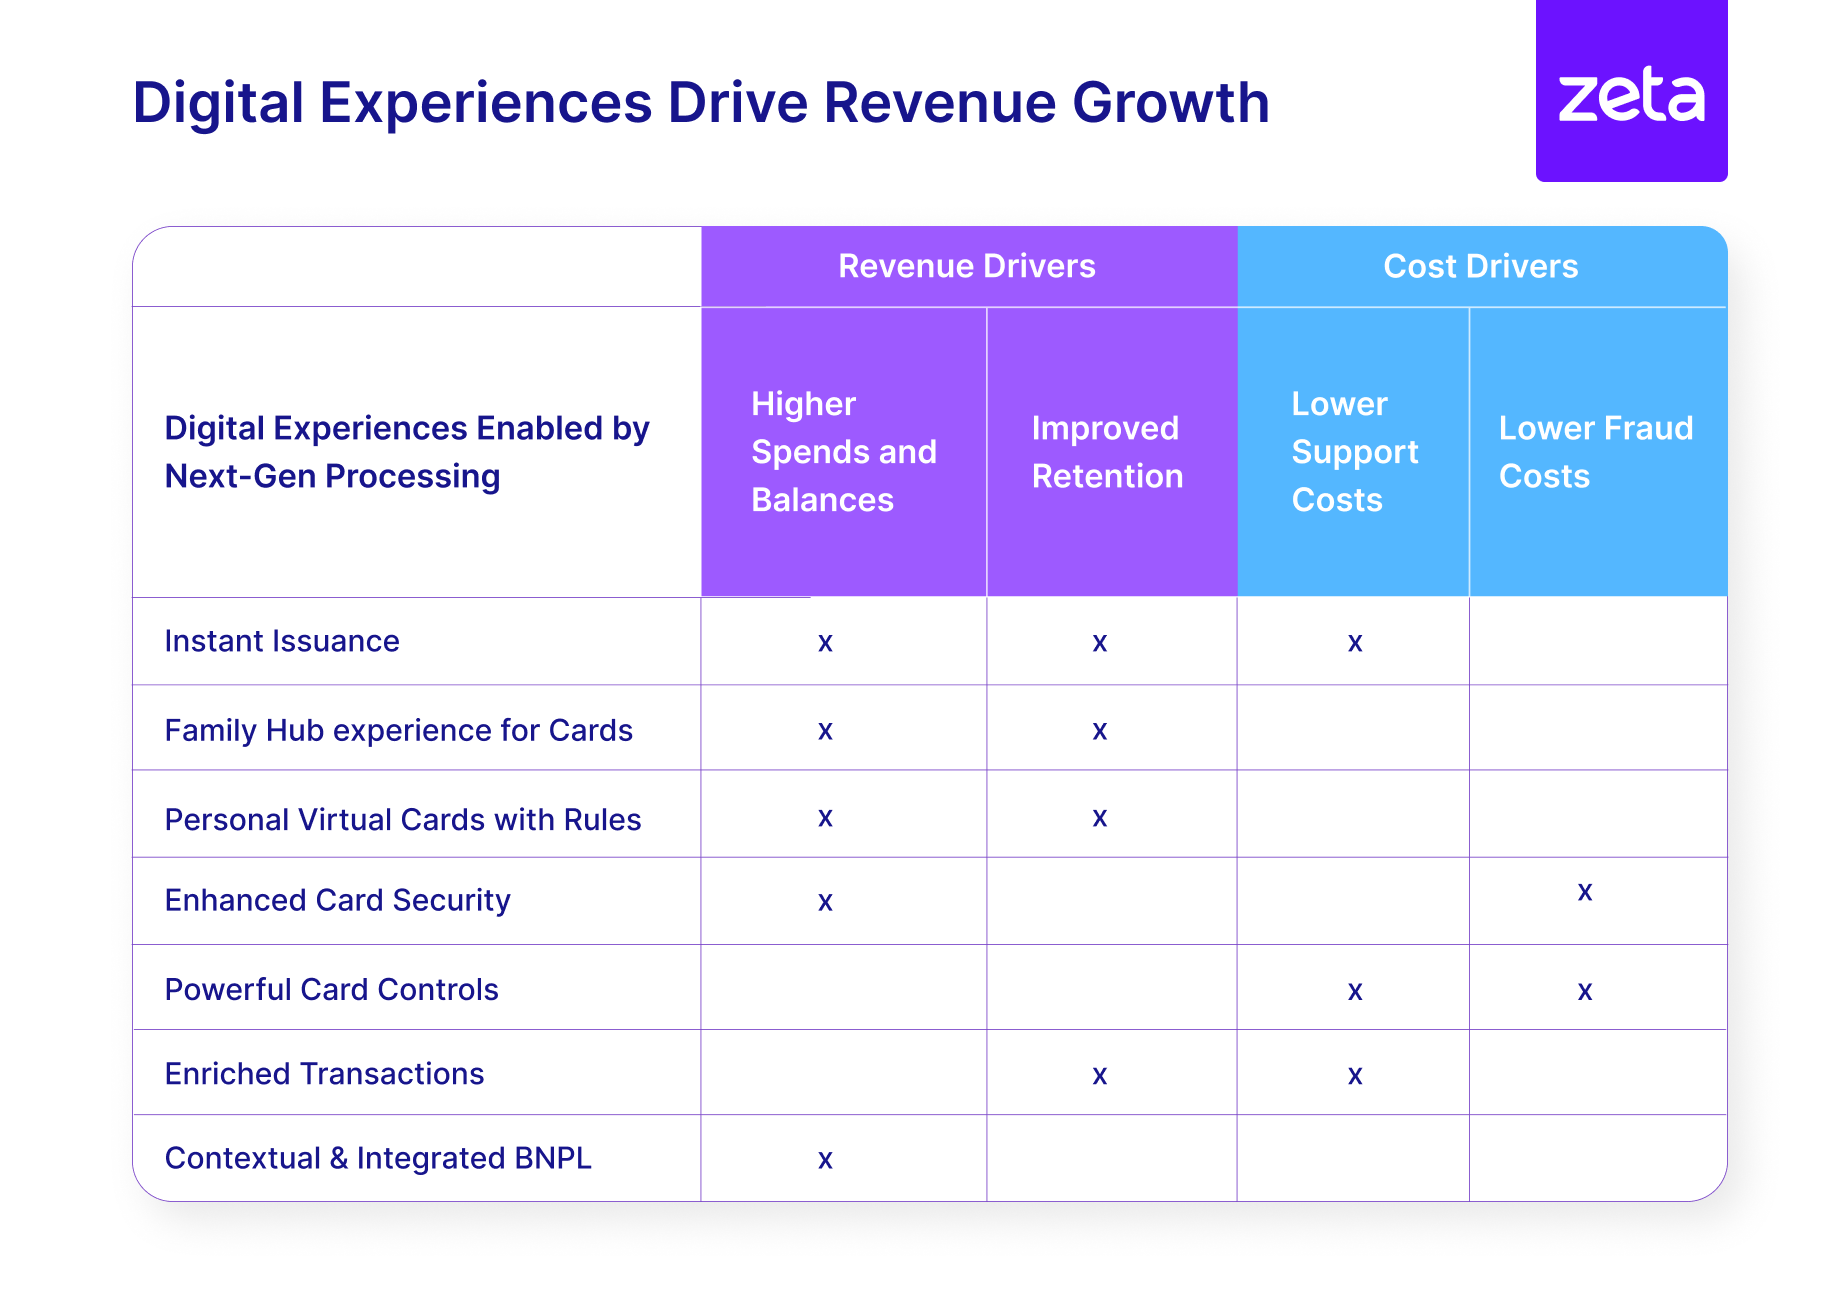 How Digital Experiences Drive Revenue Growth